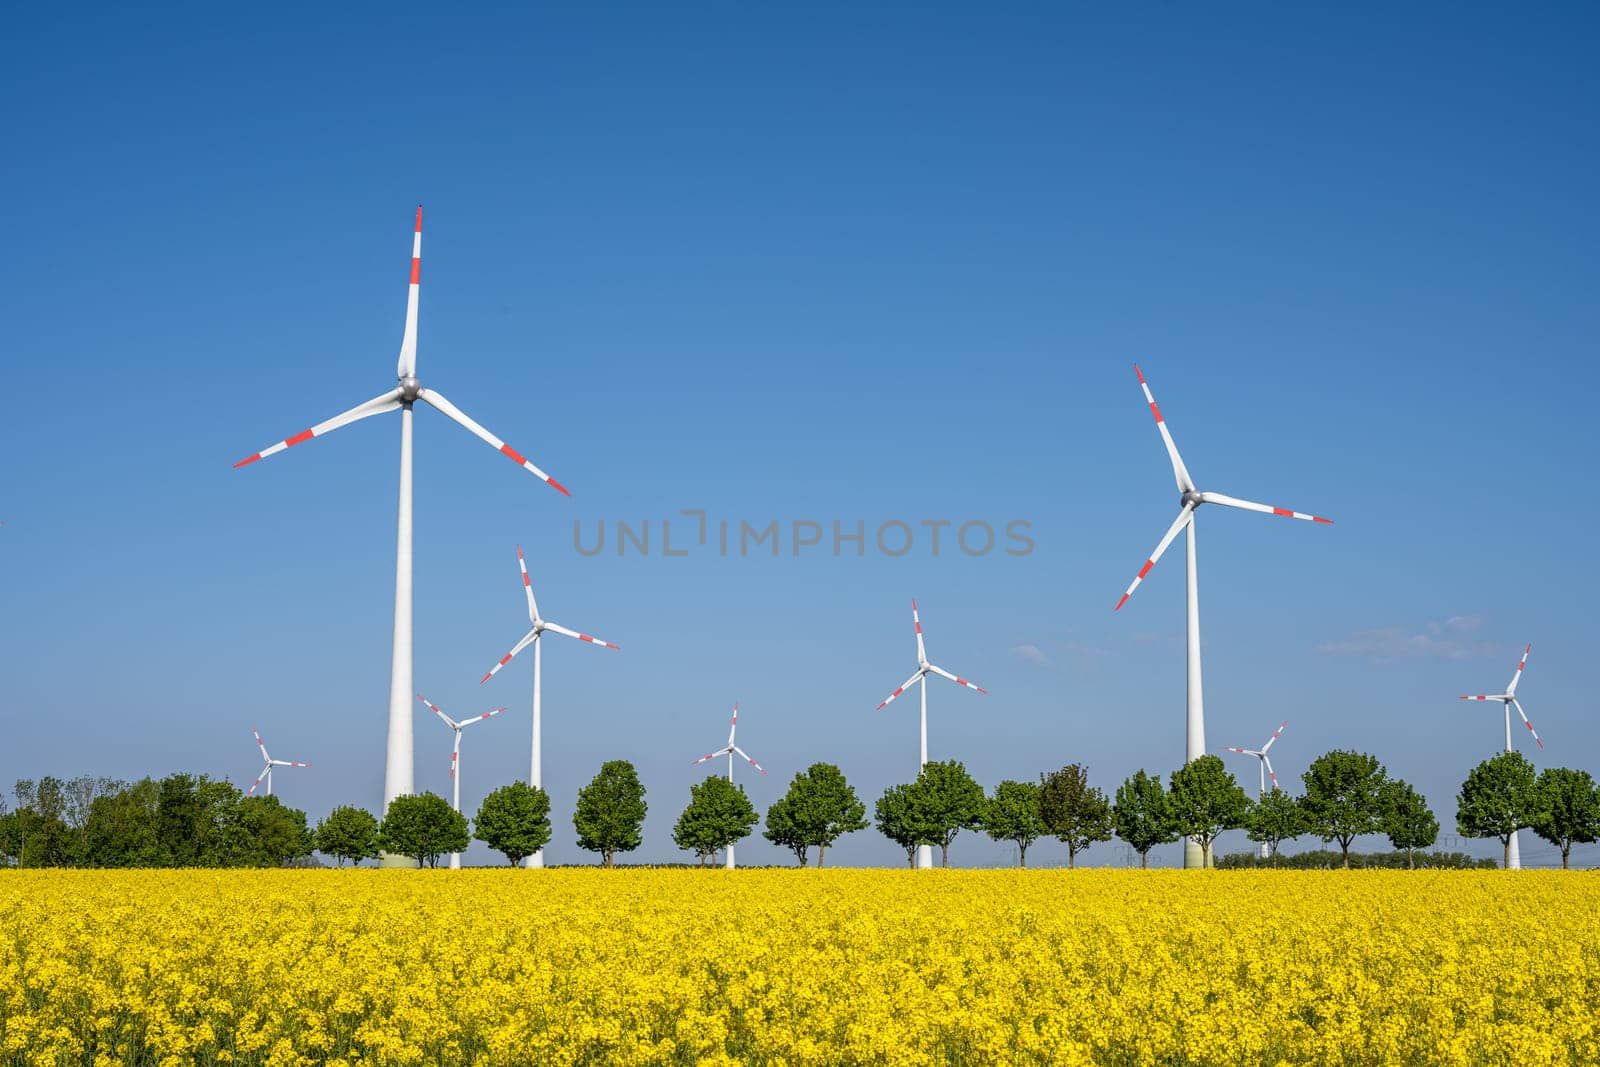 Wind turbines in a blooming rapeseed field seen in Germany